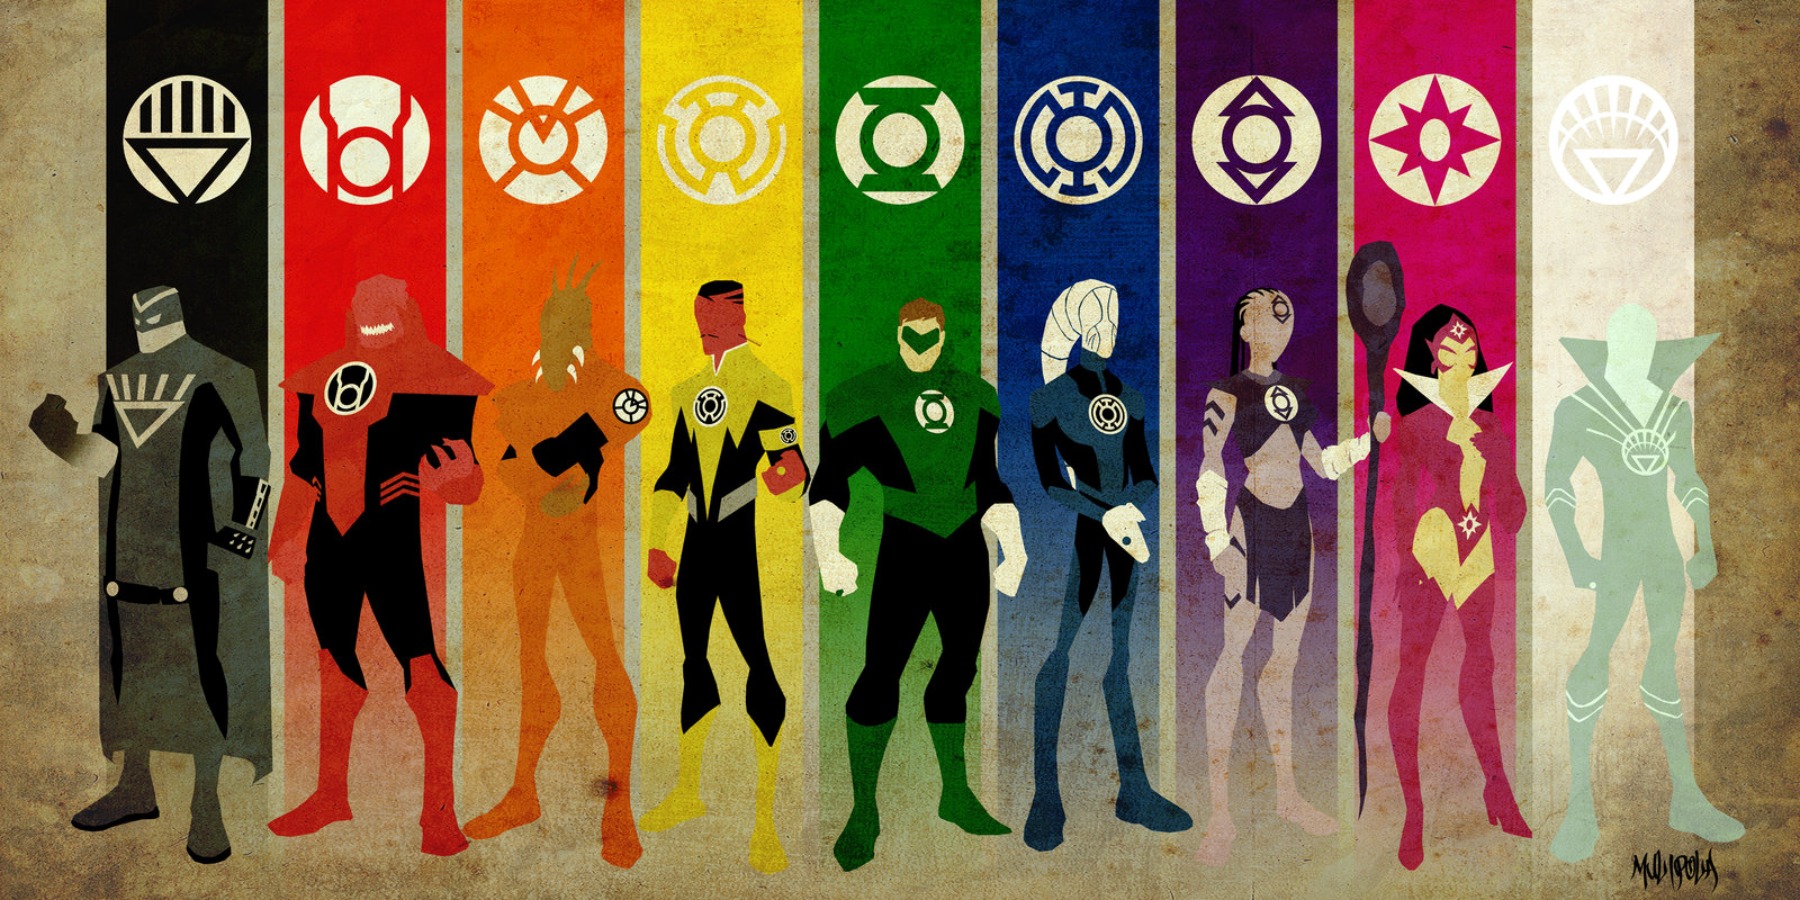 Green Lantern Dc Ics Superhero G Wallpaper Background